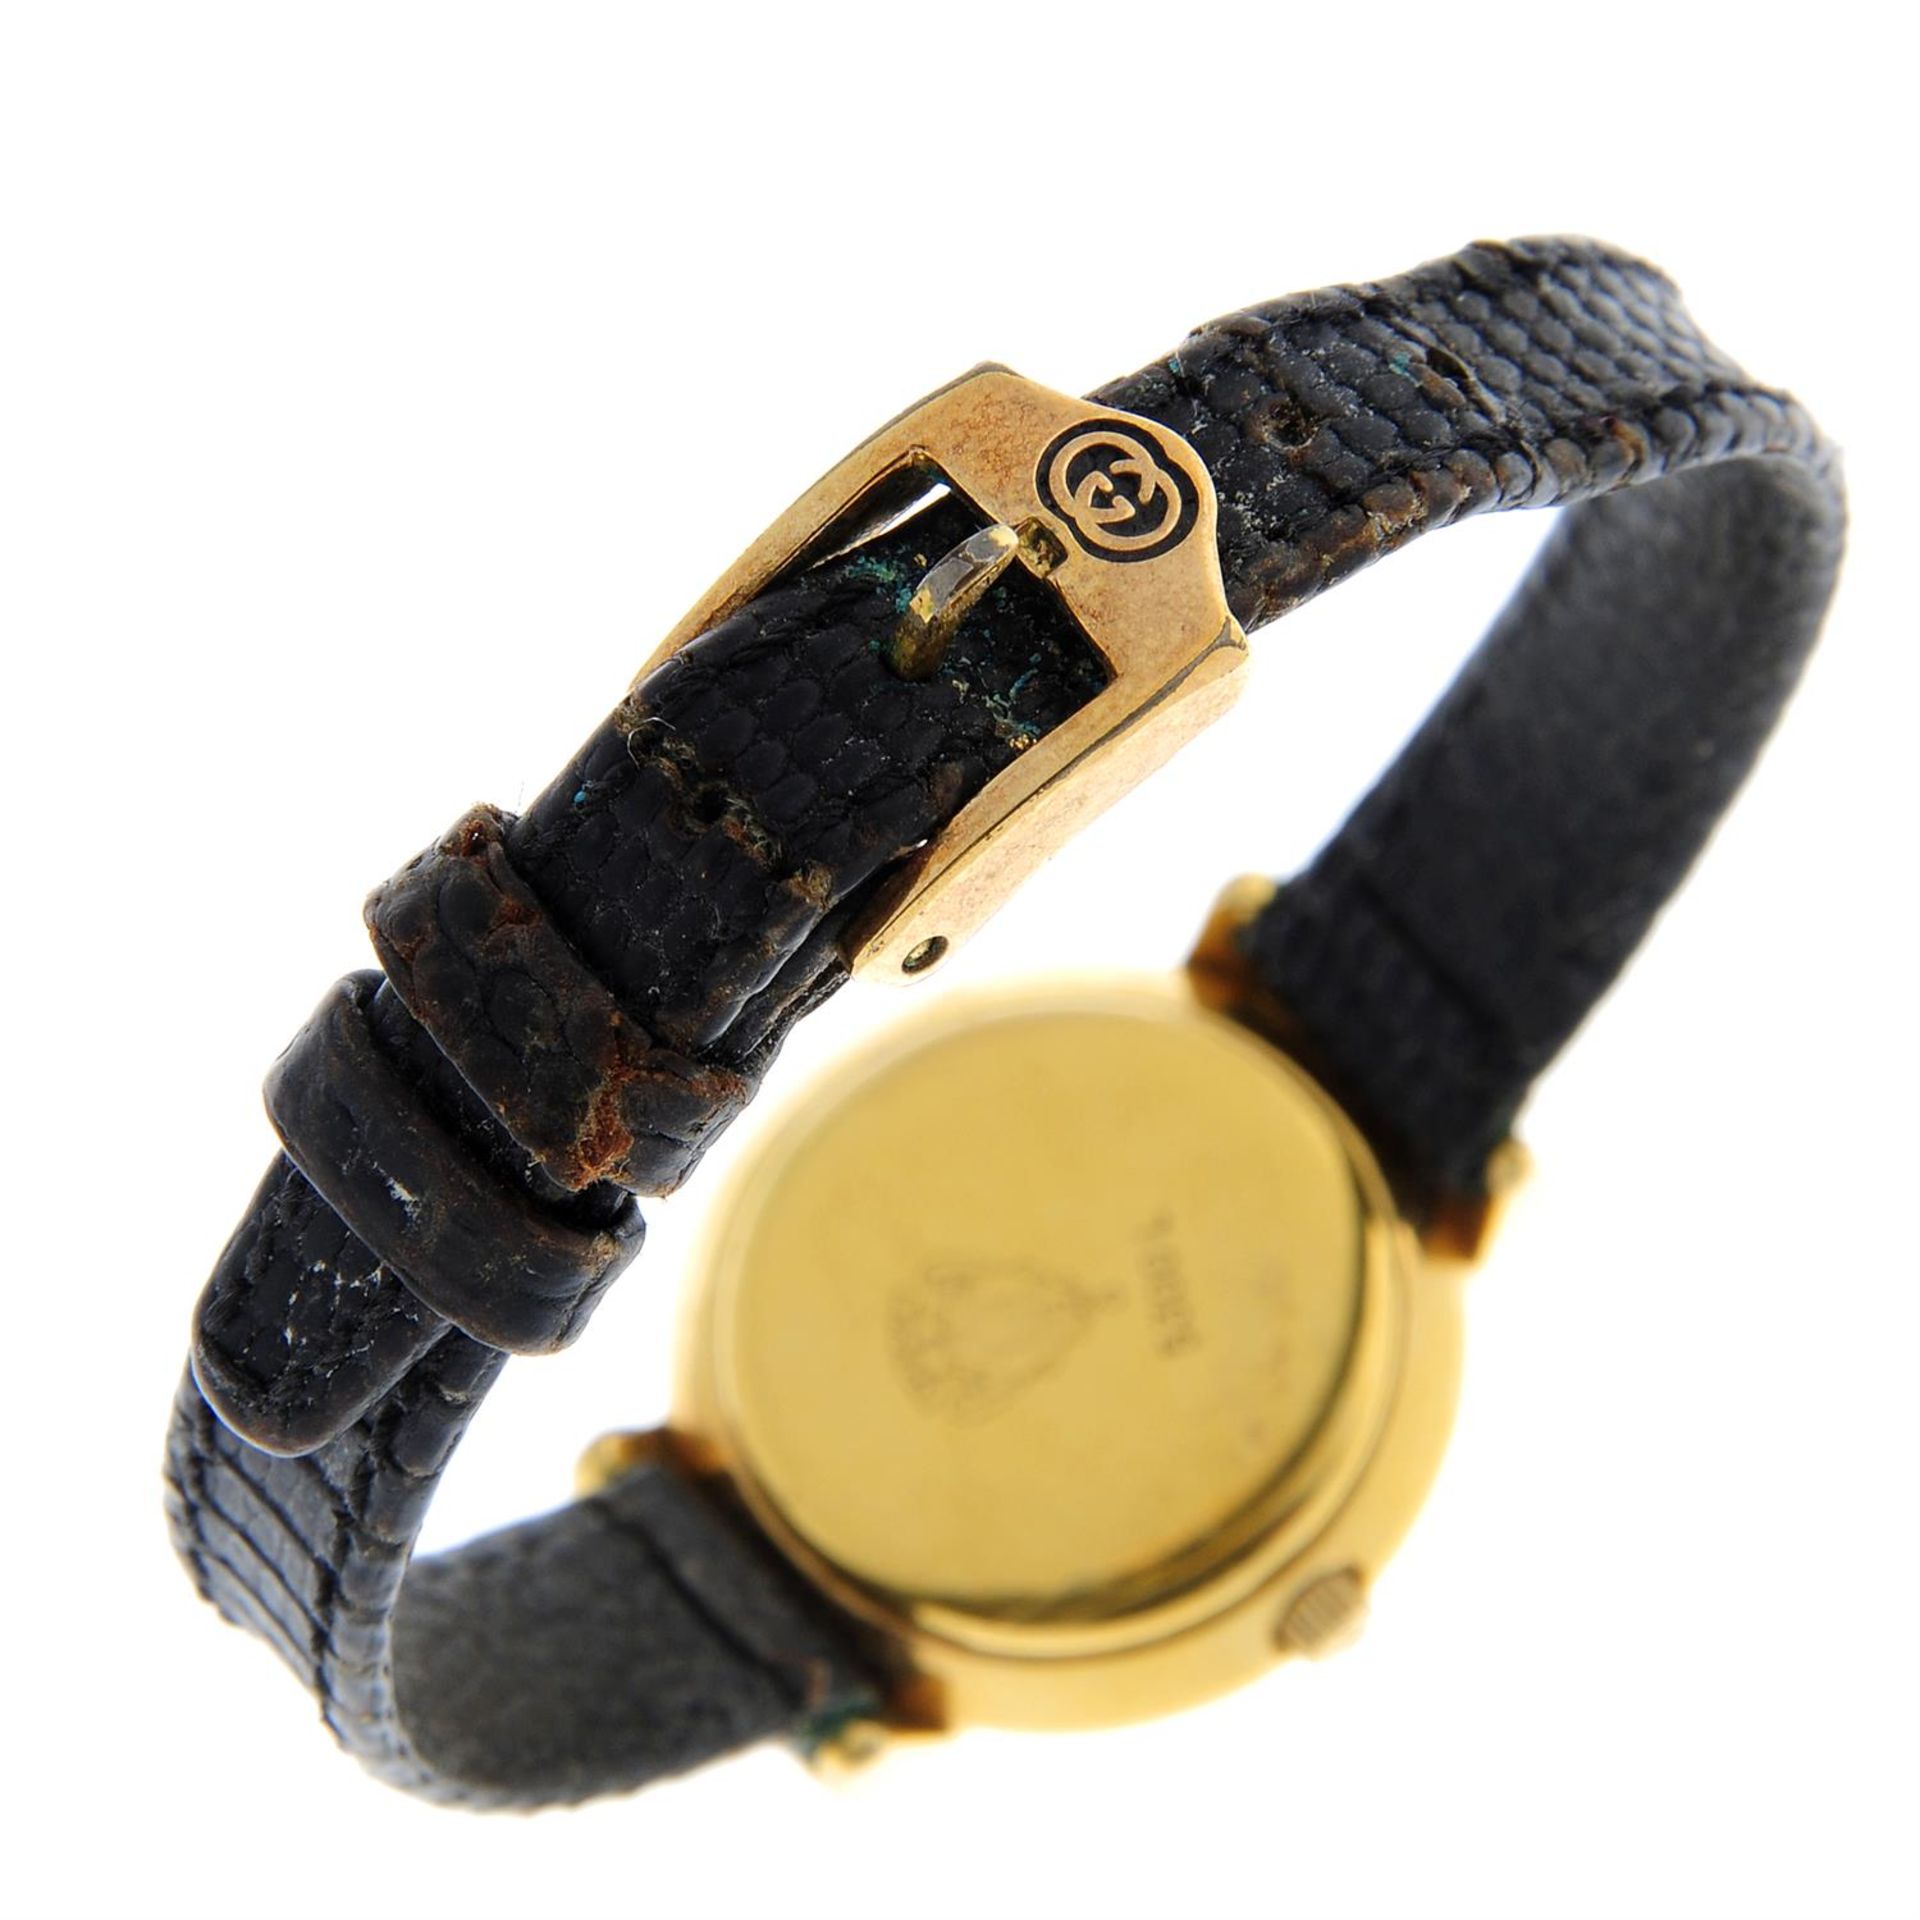 Gucci - a 5300L wrist watch, 23mm. - Image 2 of 4